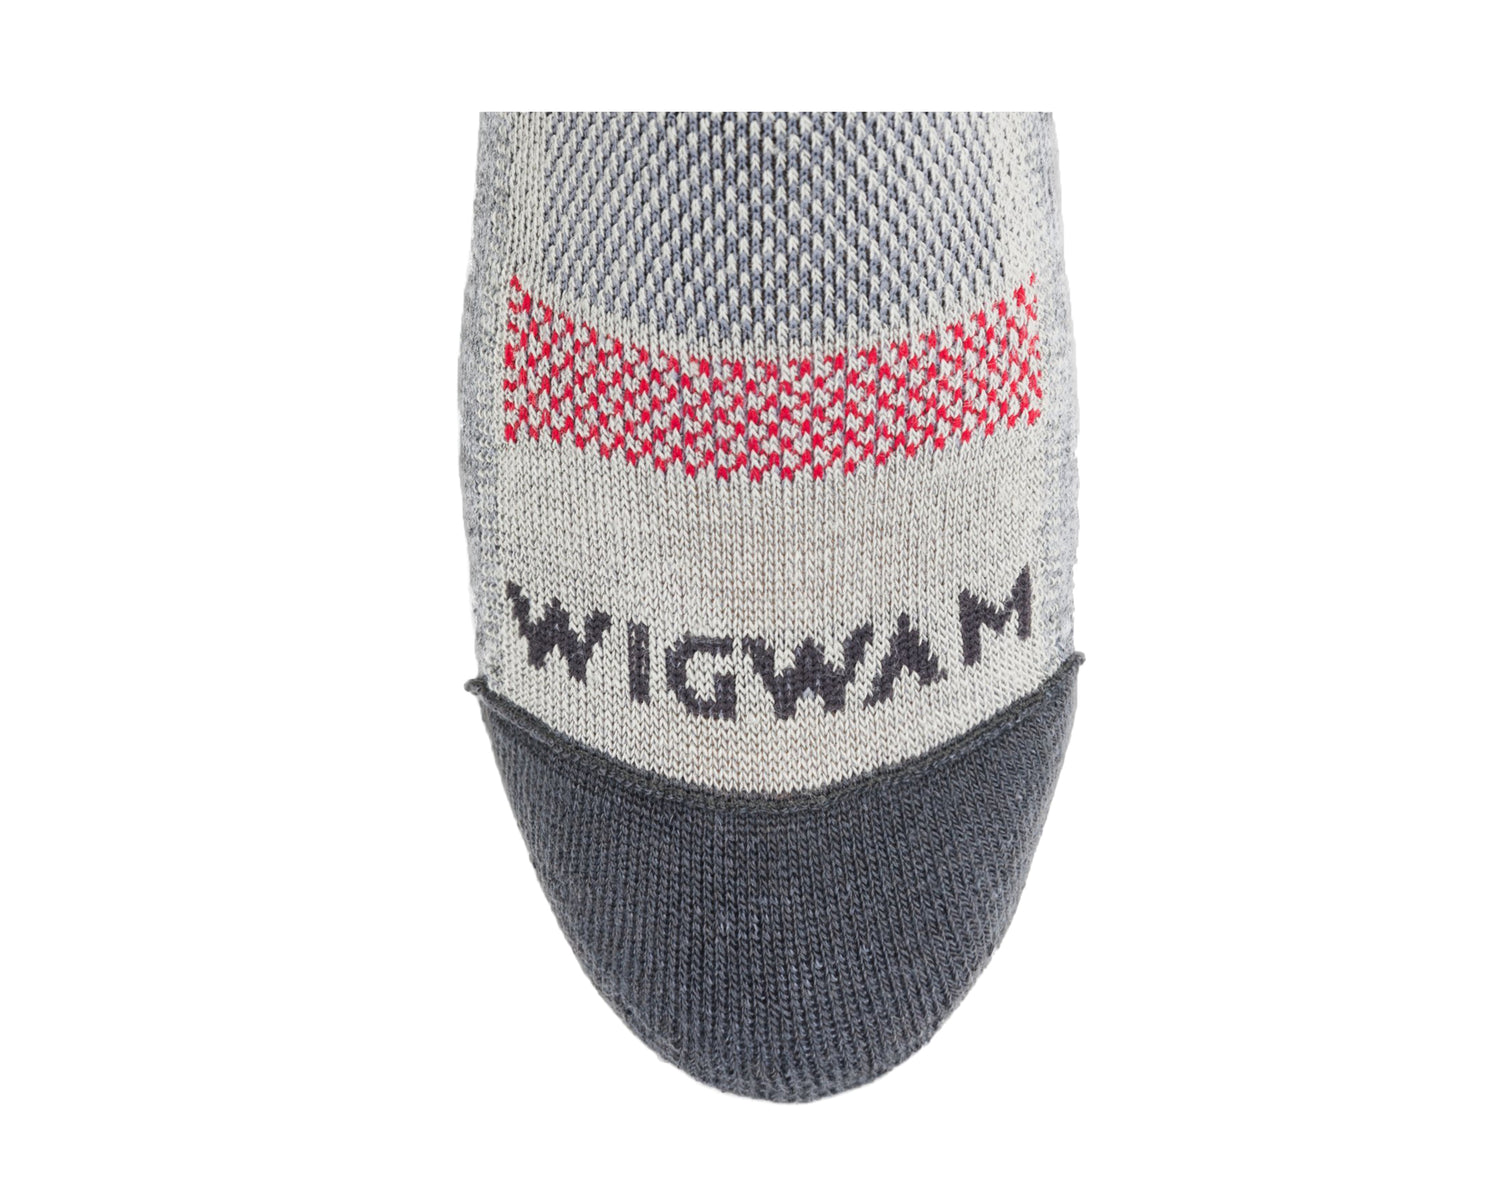 WigWam Ultra Cool Lite Quarter Socks